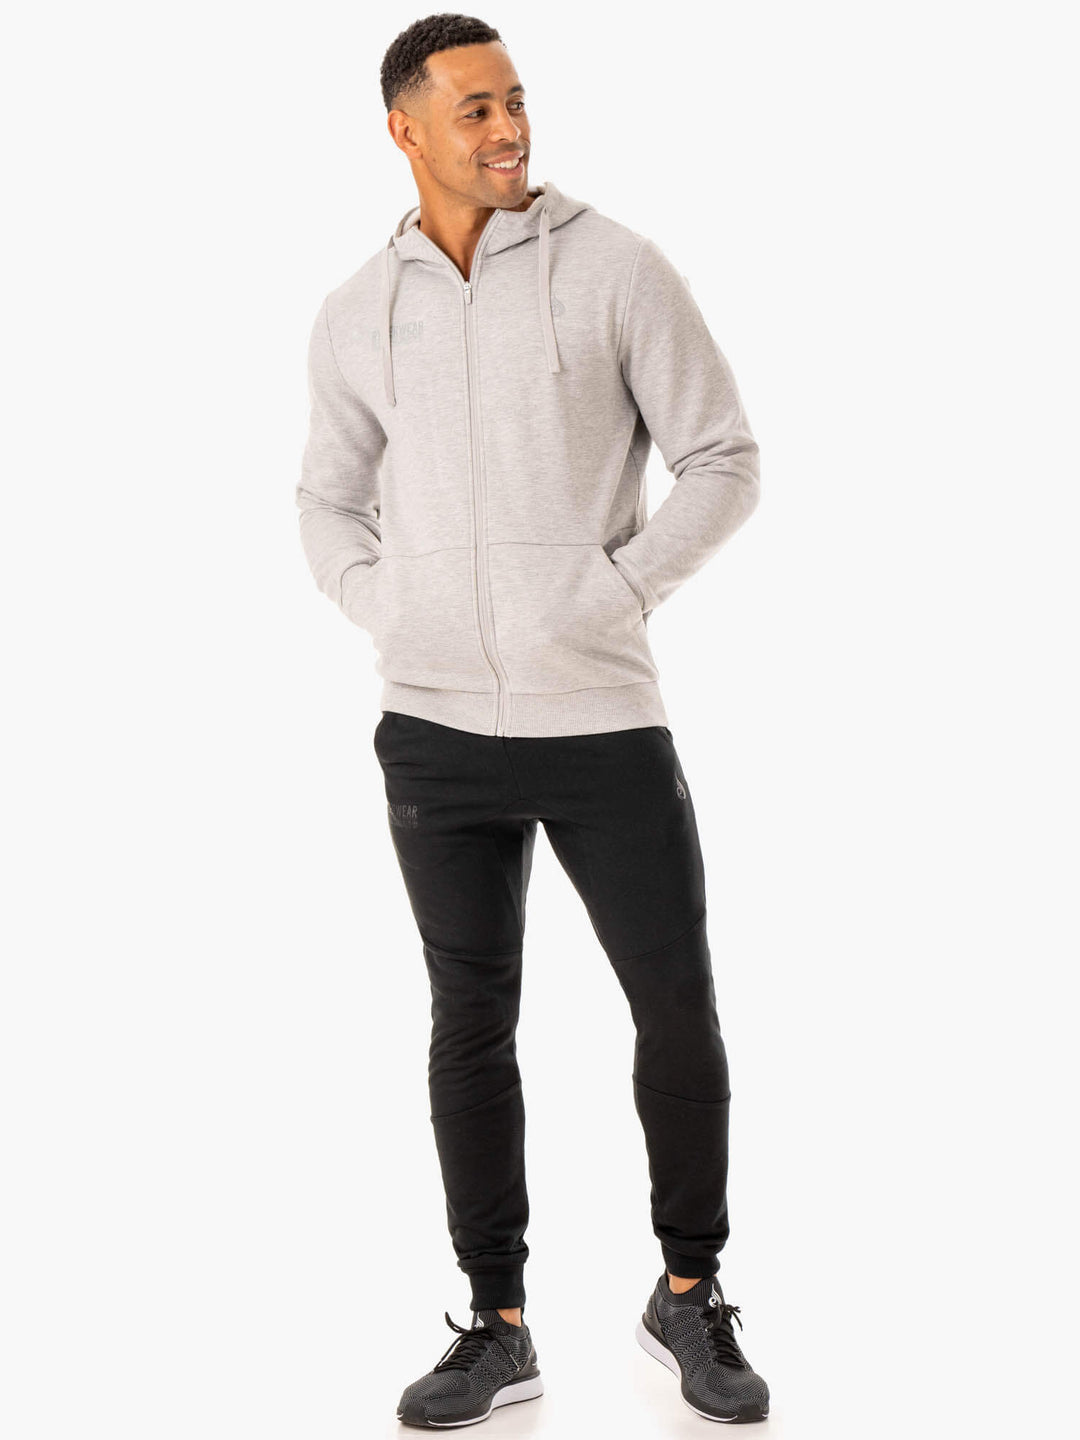 Limitless Zip Up Jacket - Grey Marl Clothing Ryderwear 